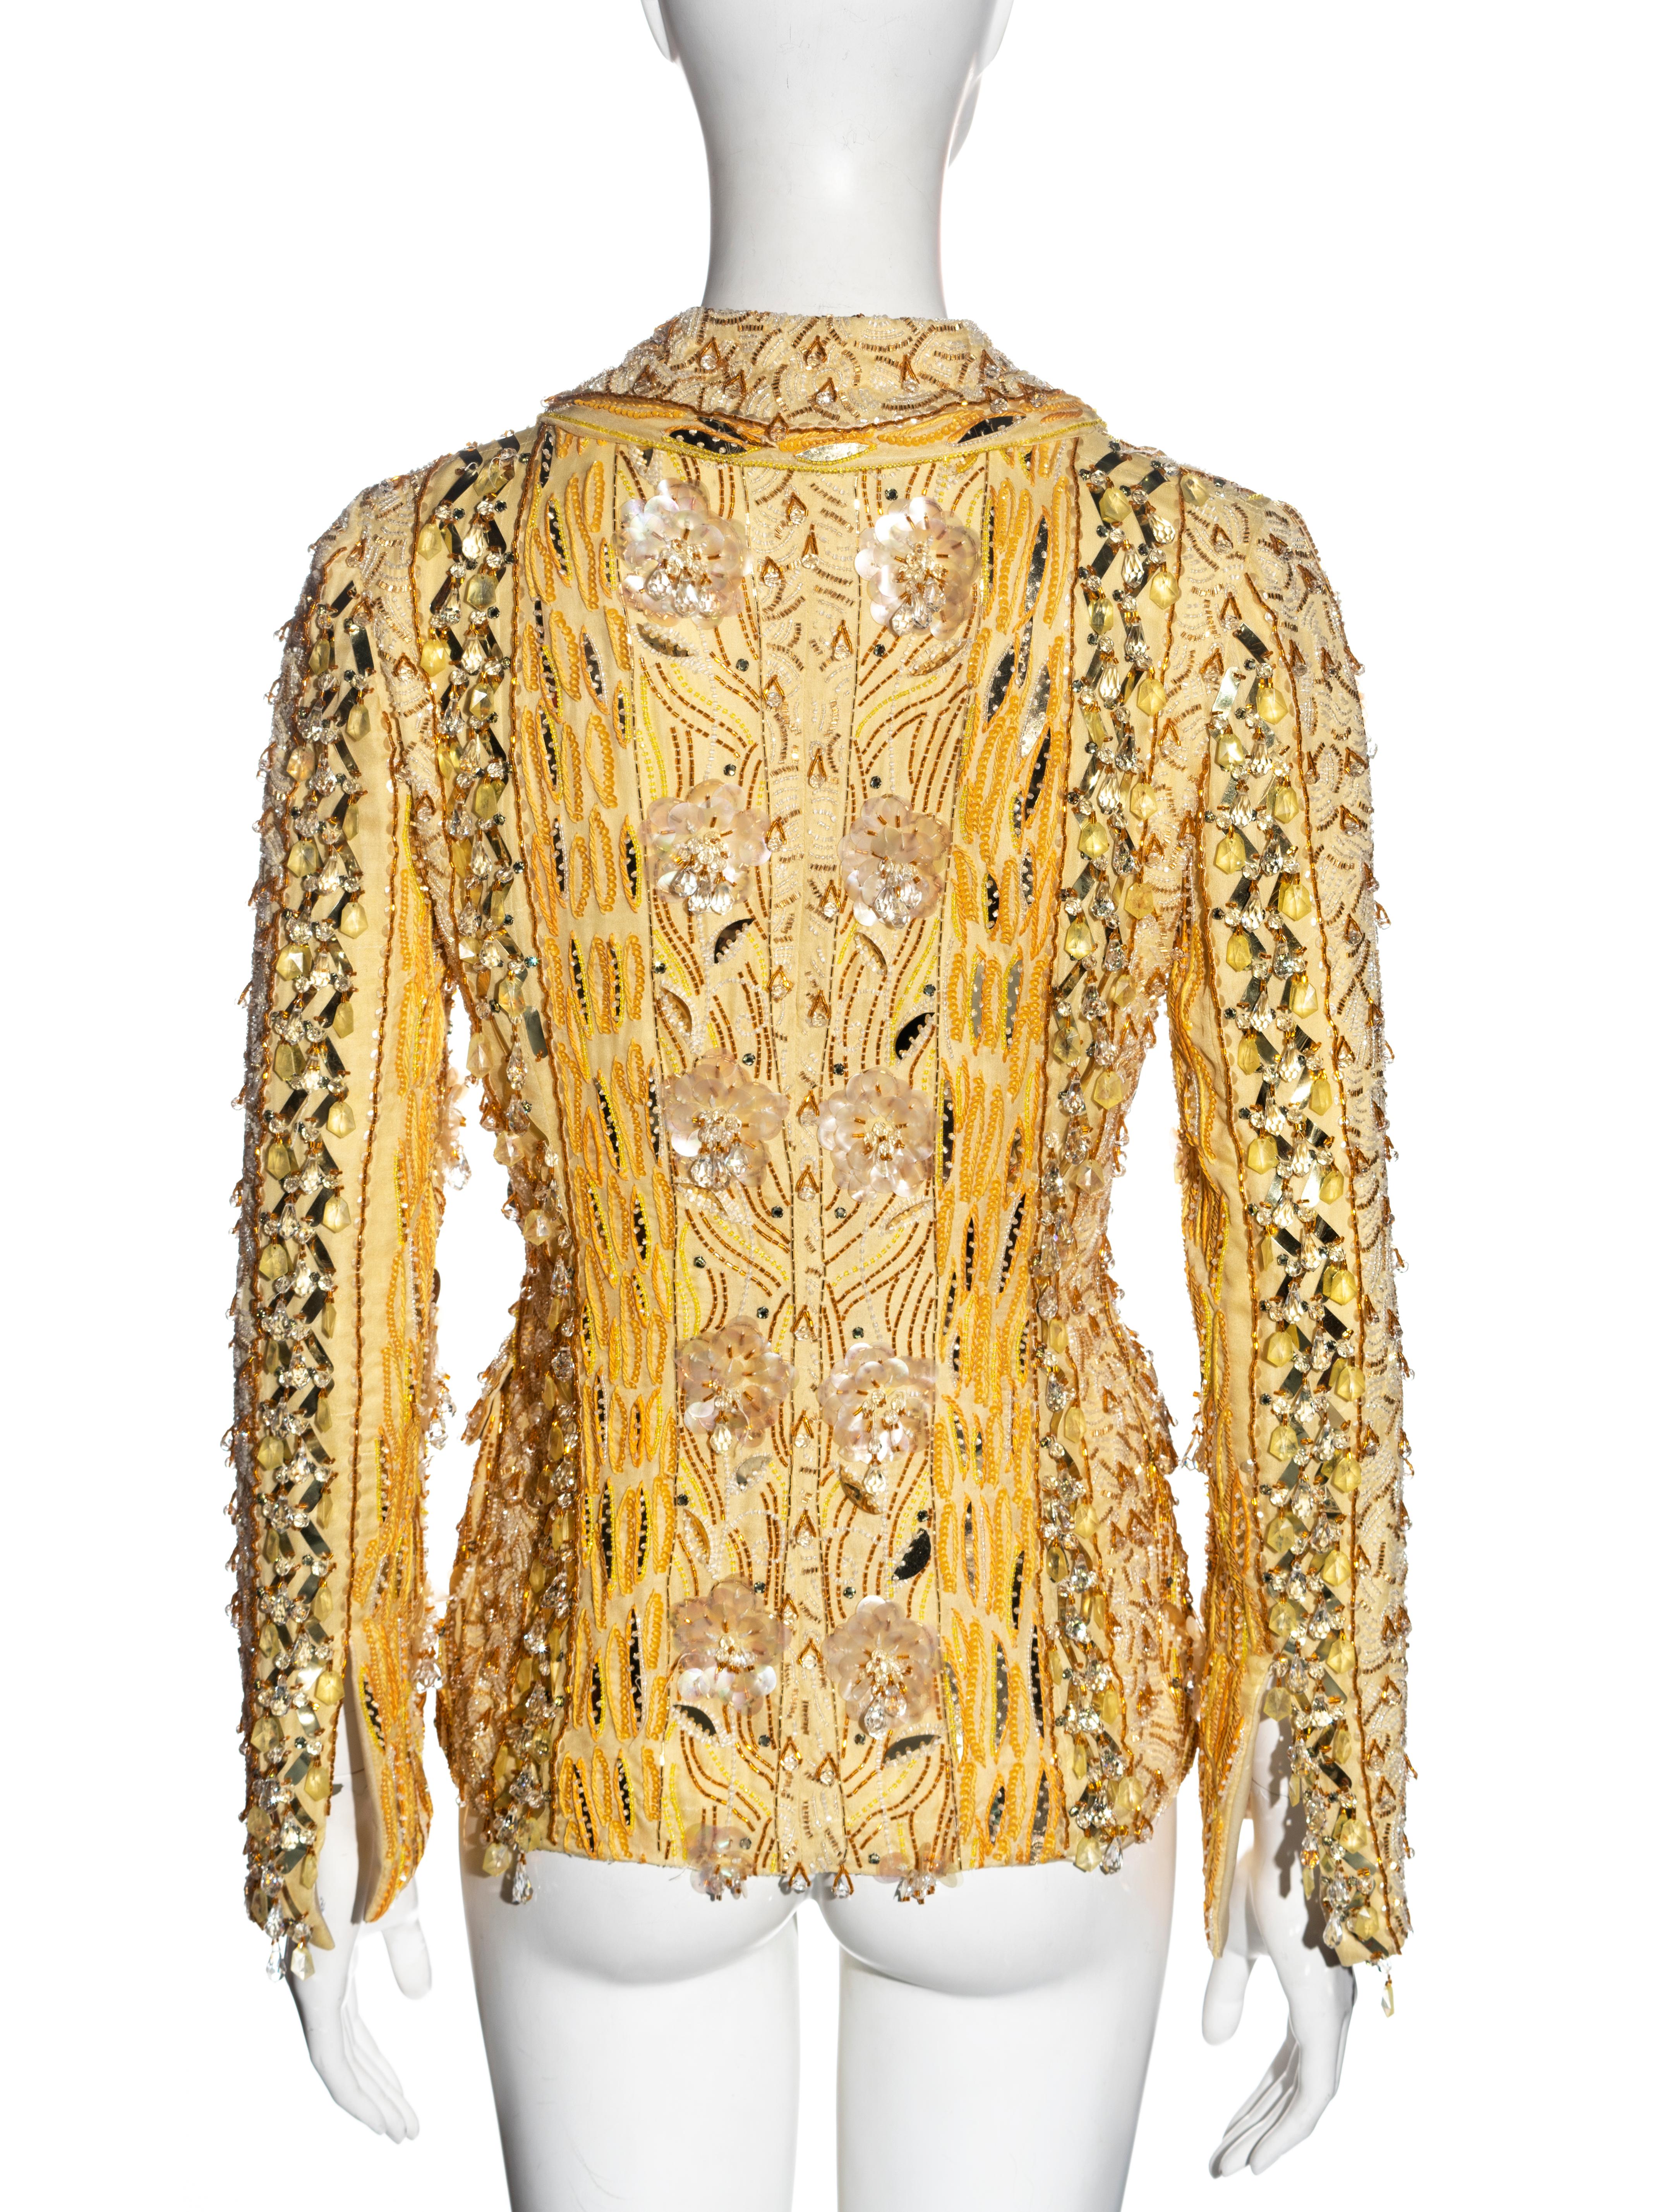 Dolce & Gabbana yellow heavily embellished silk evening jacket, ss 2004 11